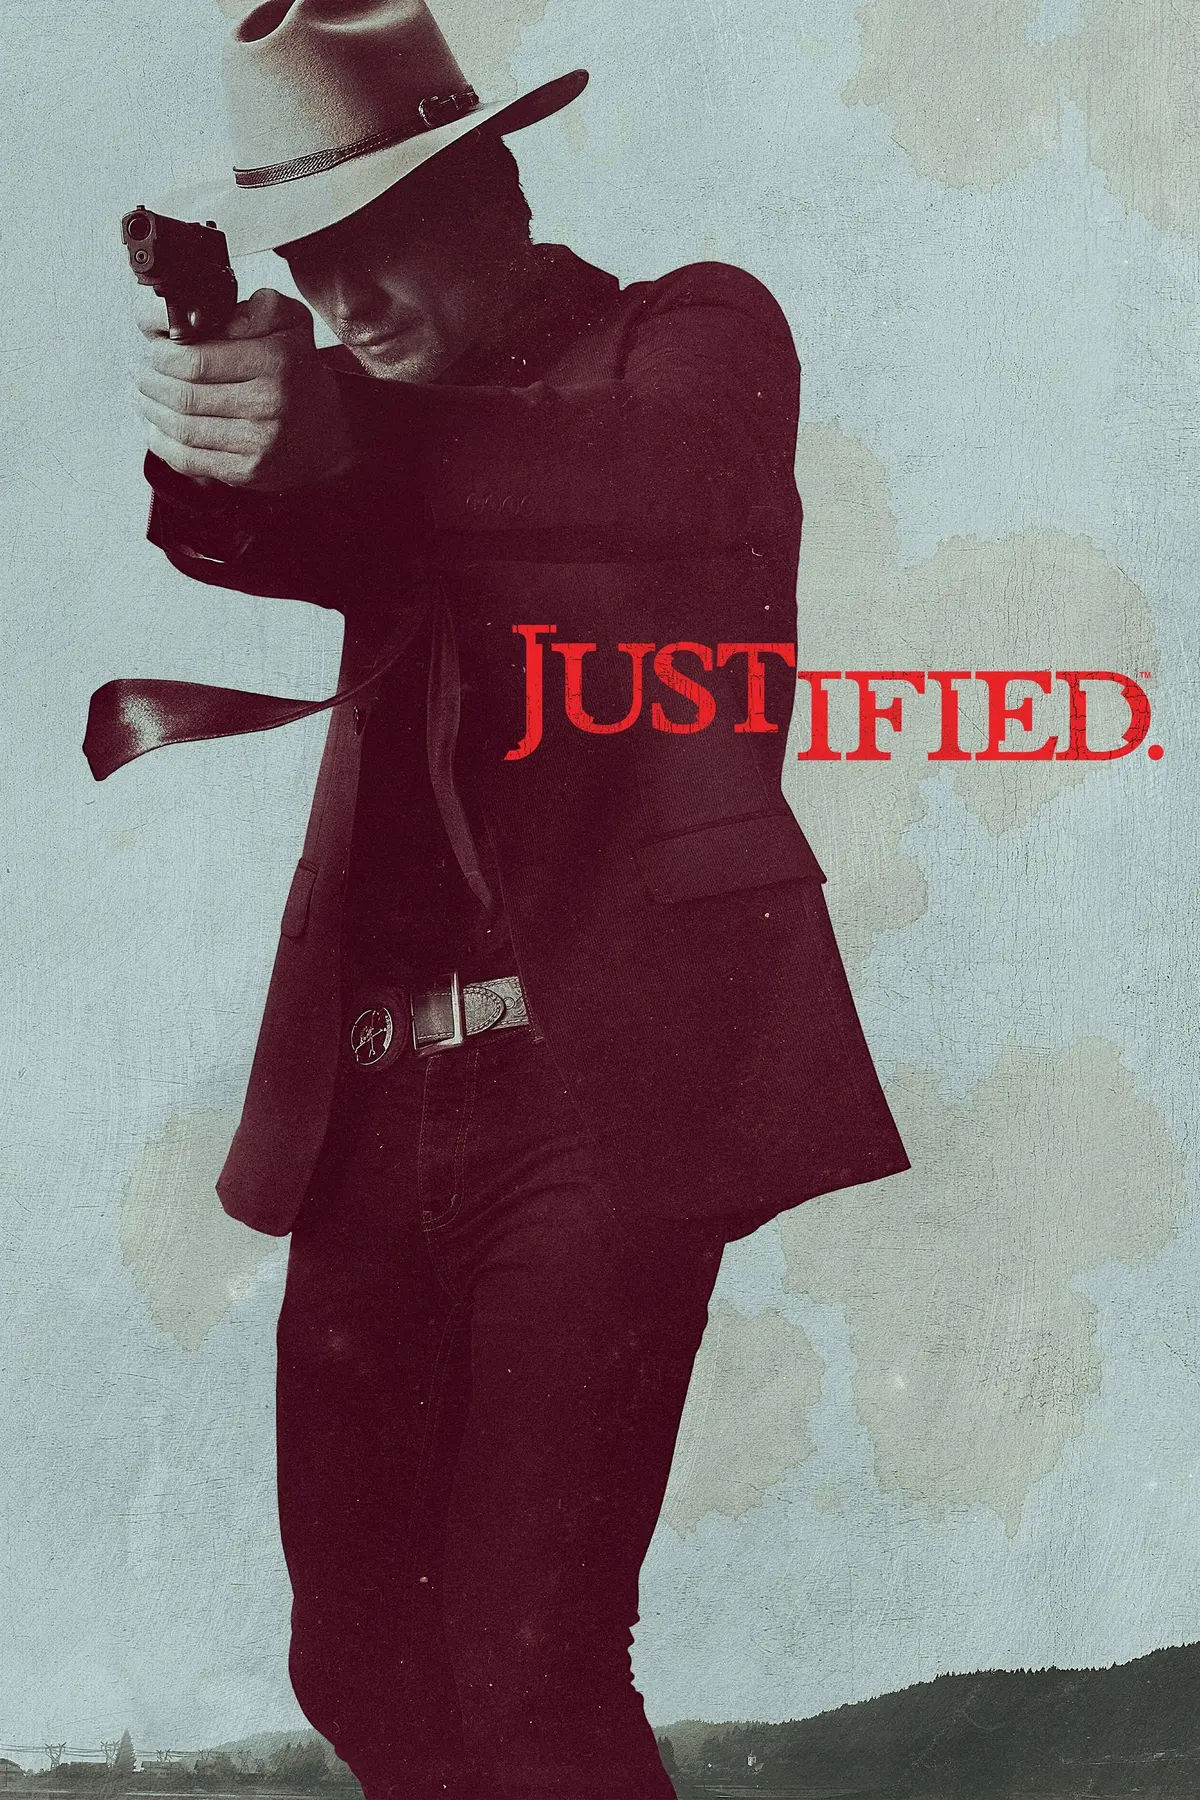 Justified S04E12 L'esprit en paix